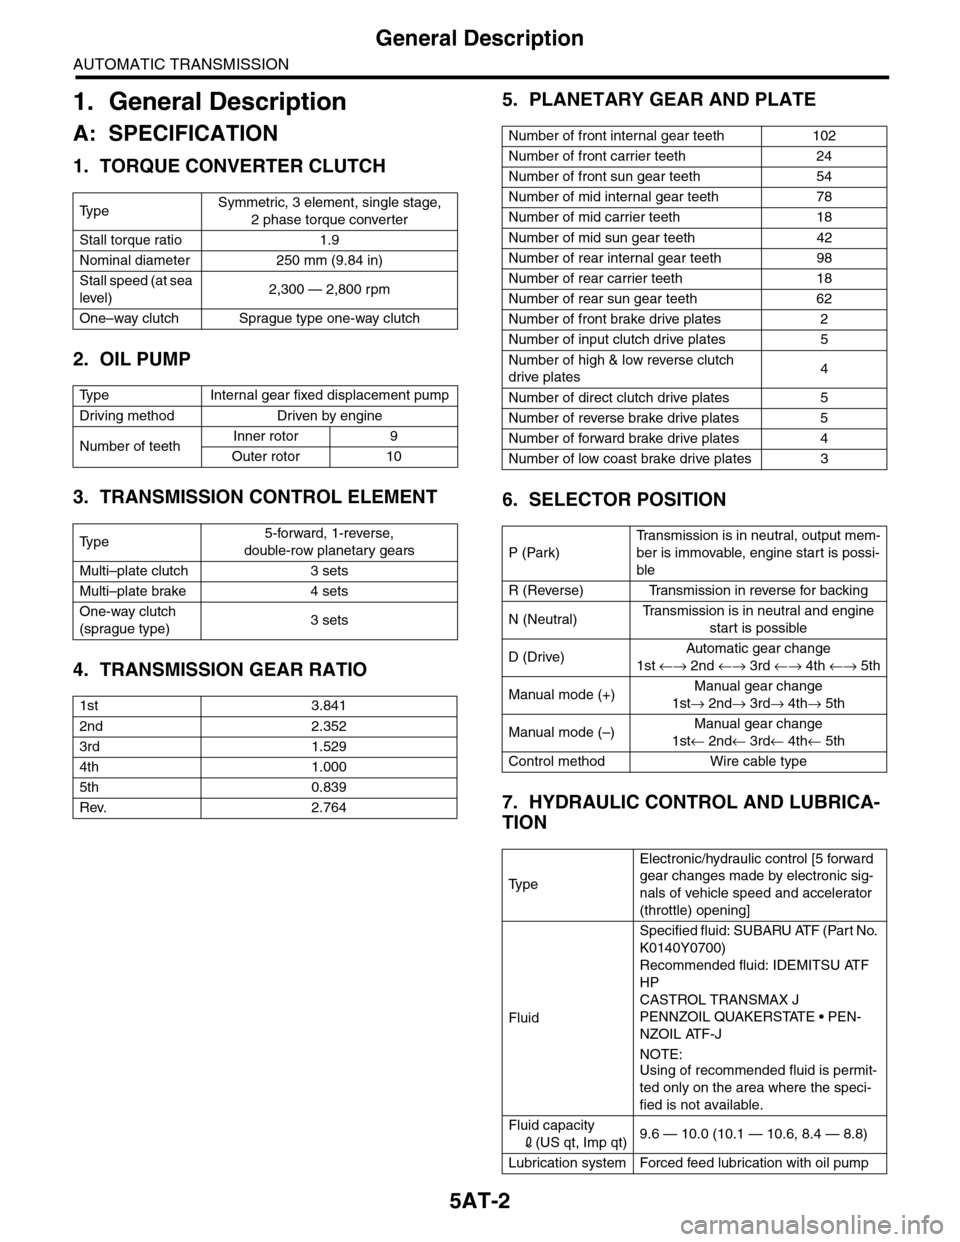 SUBARU TRIBECA 2009 1.G Service Owners Manual 5AT-2
General Description
AUTOMATIC TRANSMISSION
1. General Description
A: SPECIFICATION
1. TORQUE CONVERTER CLUTCH
2. OIL PUMP
3. TRANSMISSION CONTROL ELEMENT
4. TRANSMISSION GEAR RATIO
5. PLANETARY 